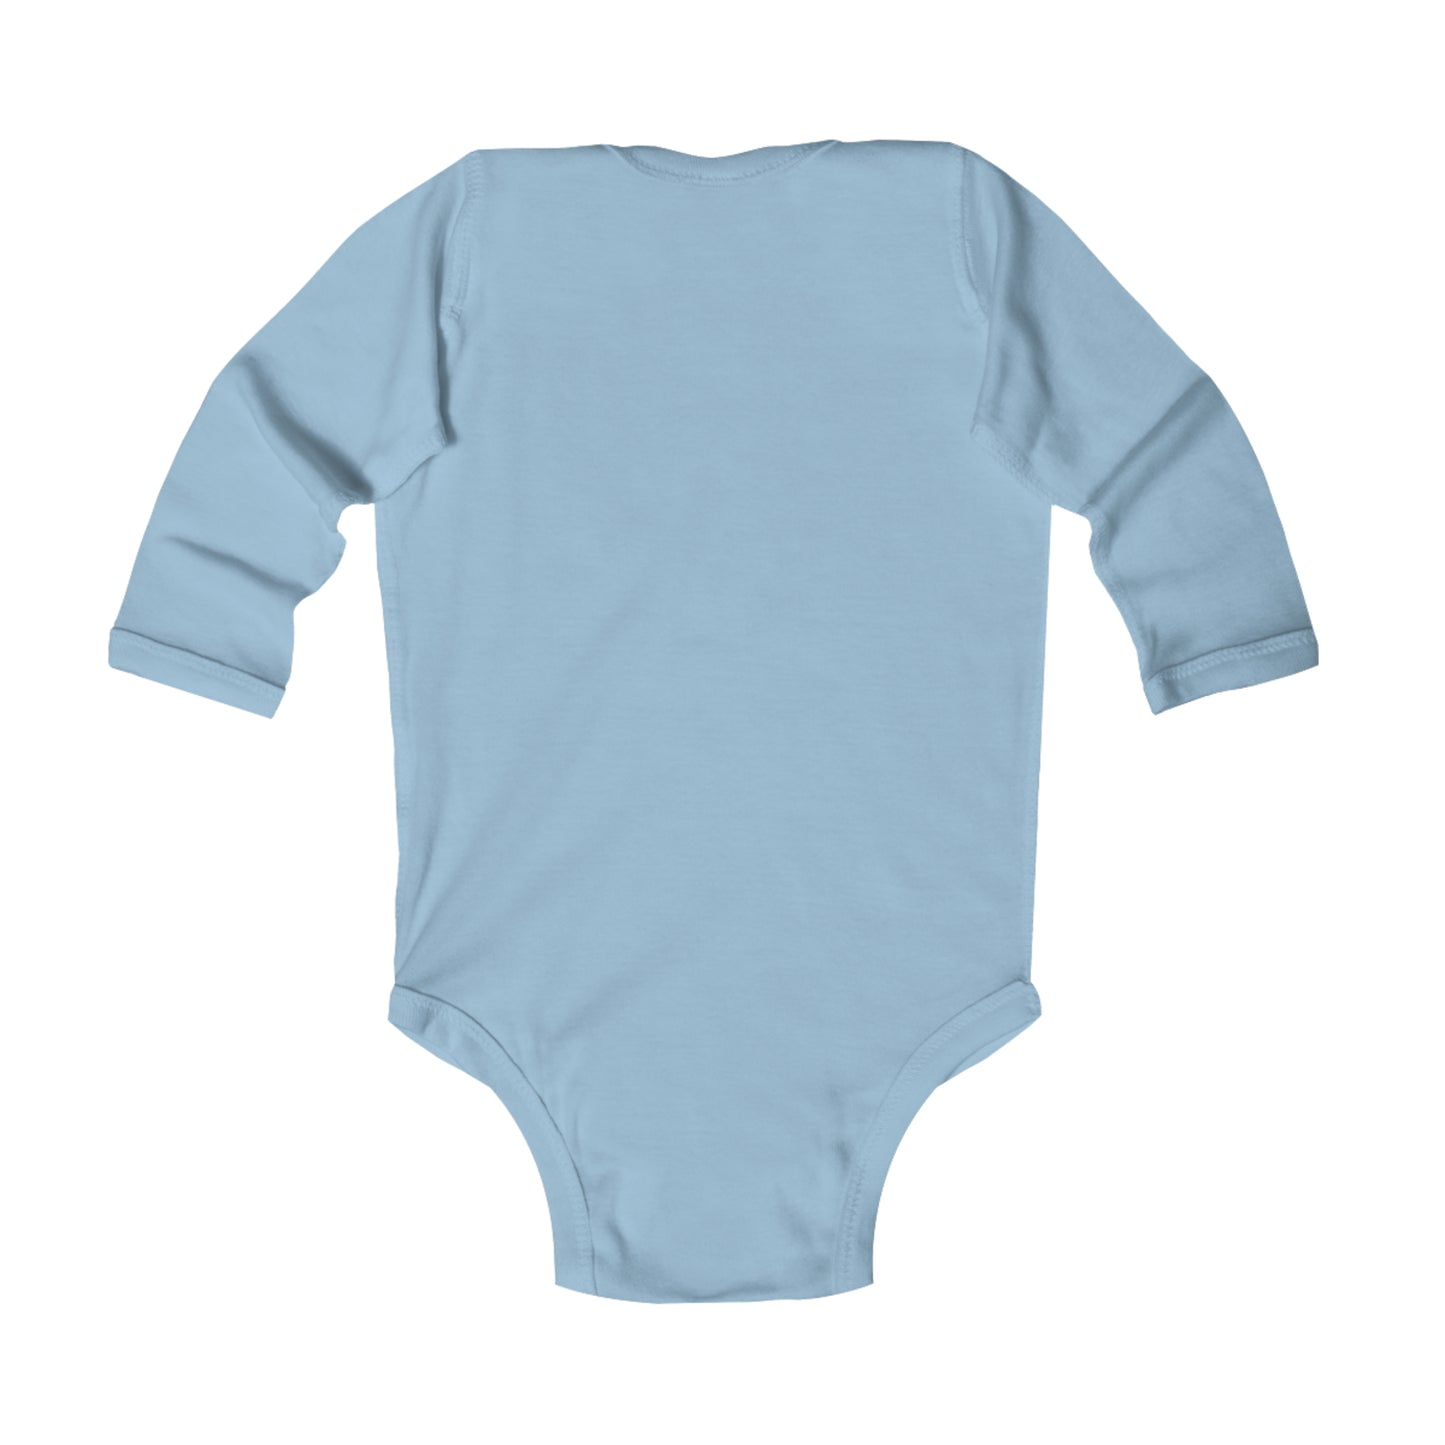 Infant bodysuit